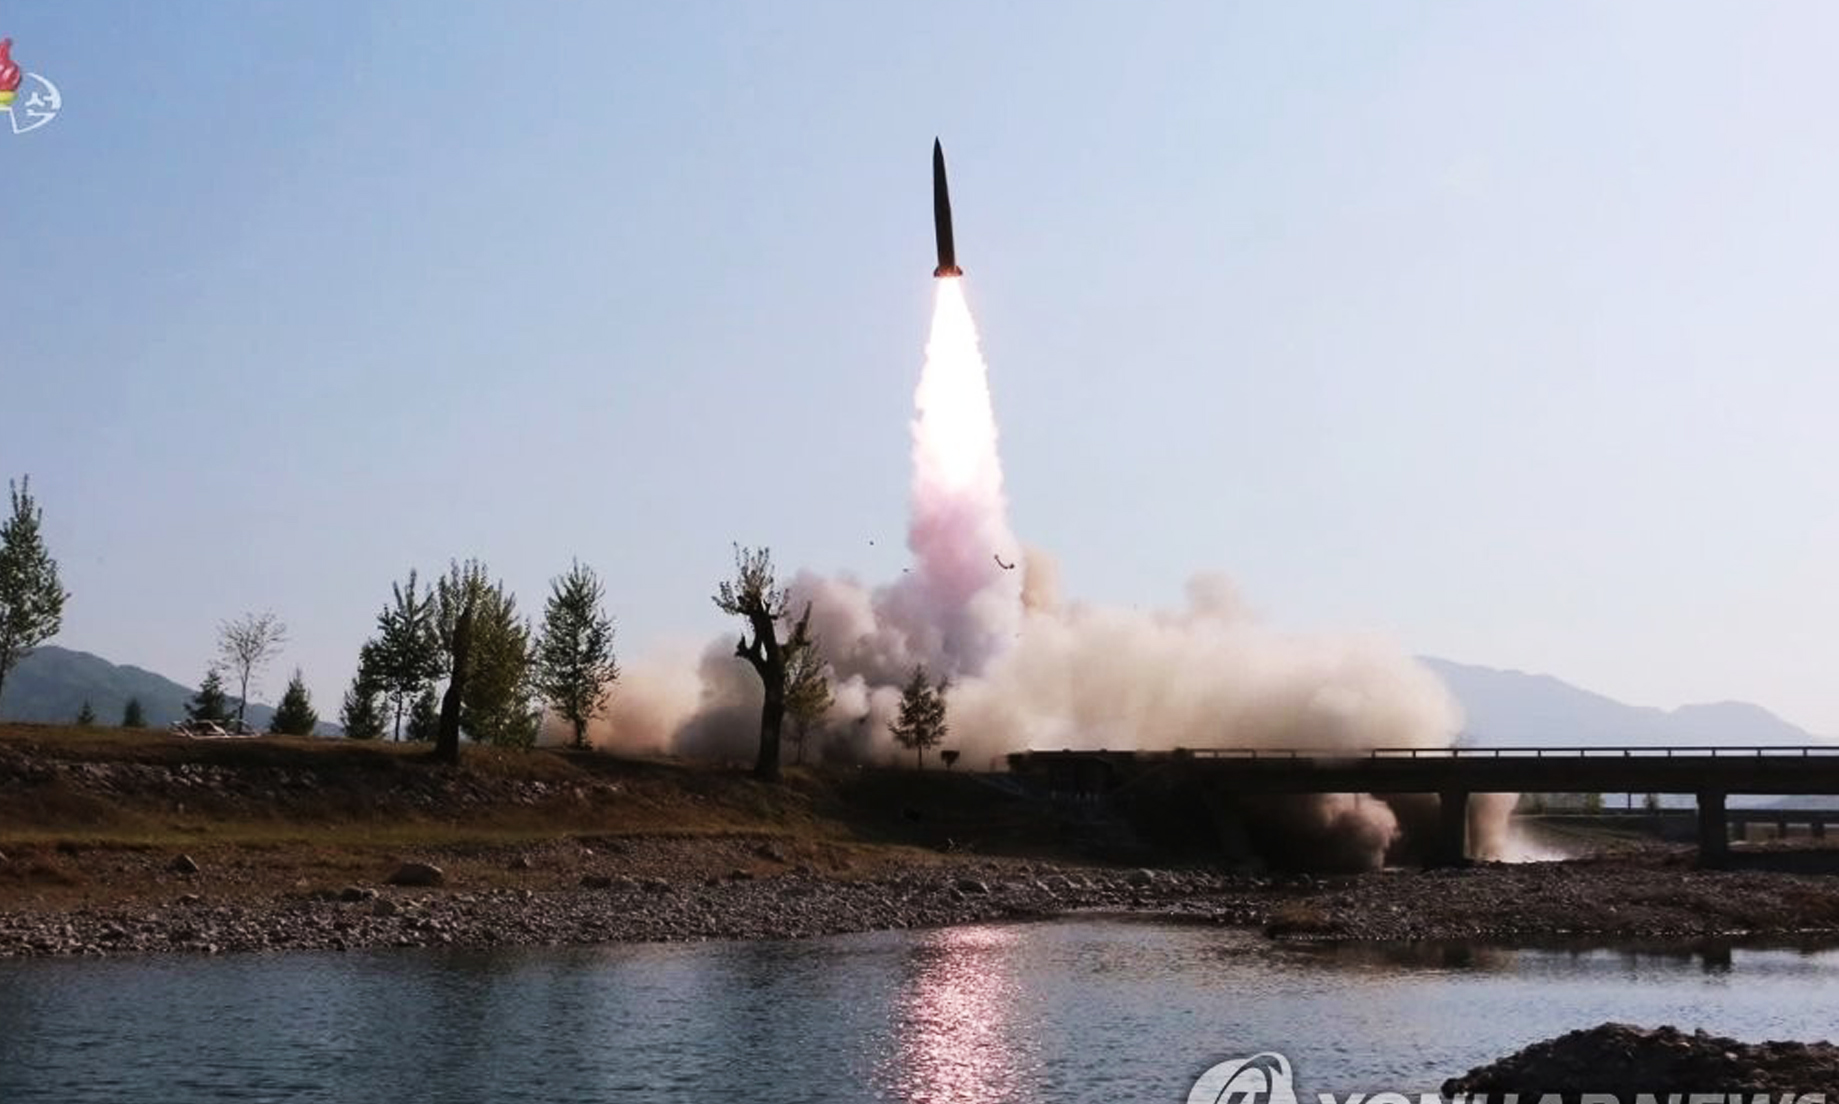 N. Korea’s ‘new’ ballistic missiles similar to Russia’s Iskander: Seoul